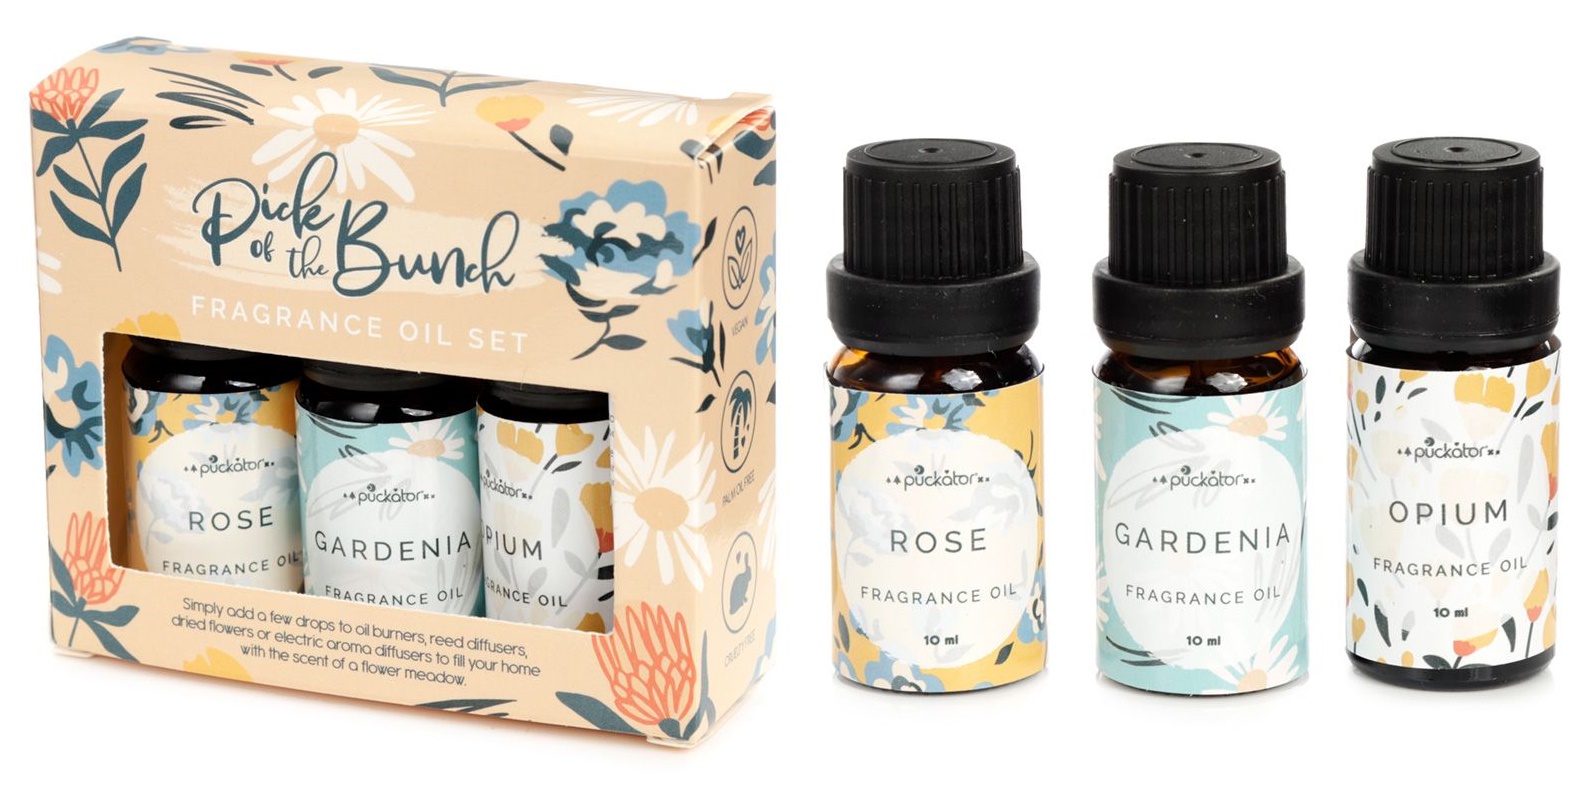 Floral Fragrance Oils Gift Set - Rose, Gardenia, Opium - Refersher Home Fragrance Oil - Set of 3 Oils